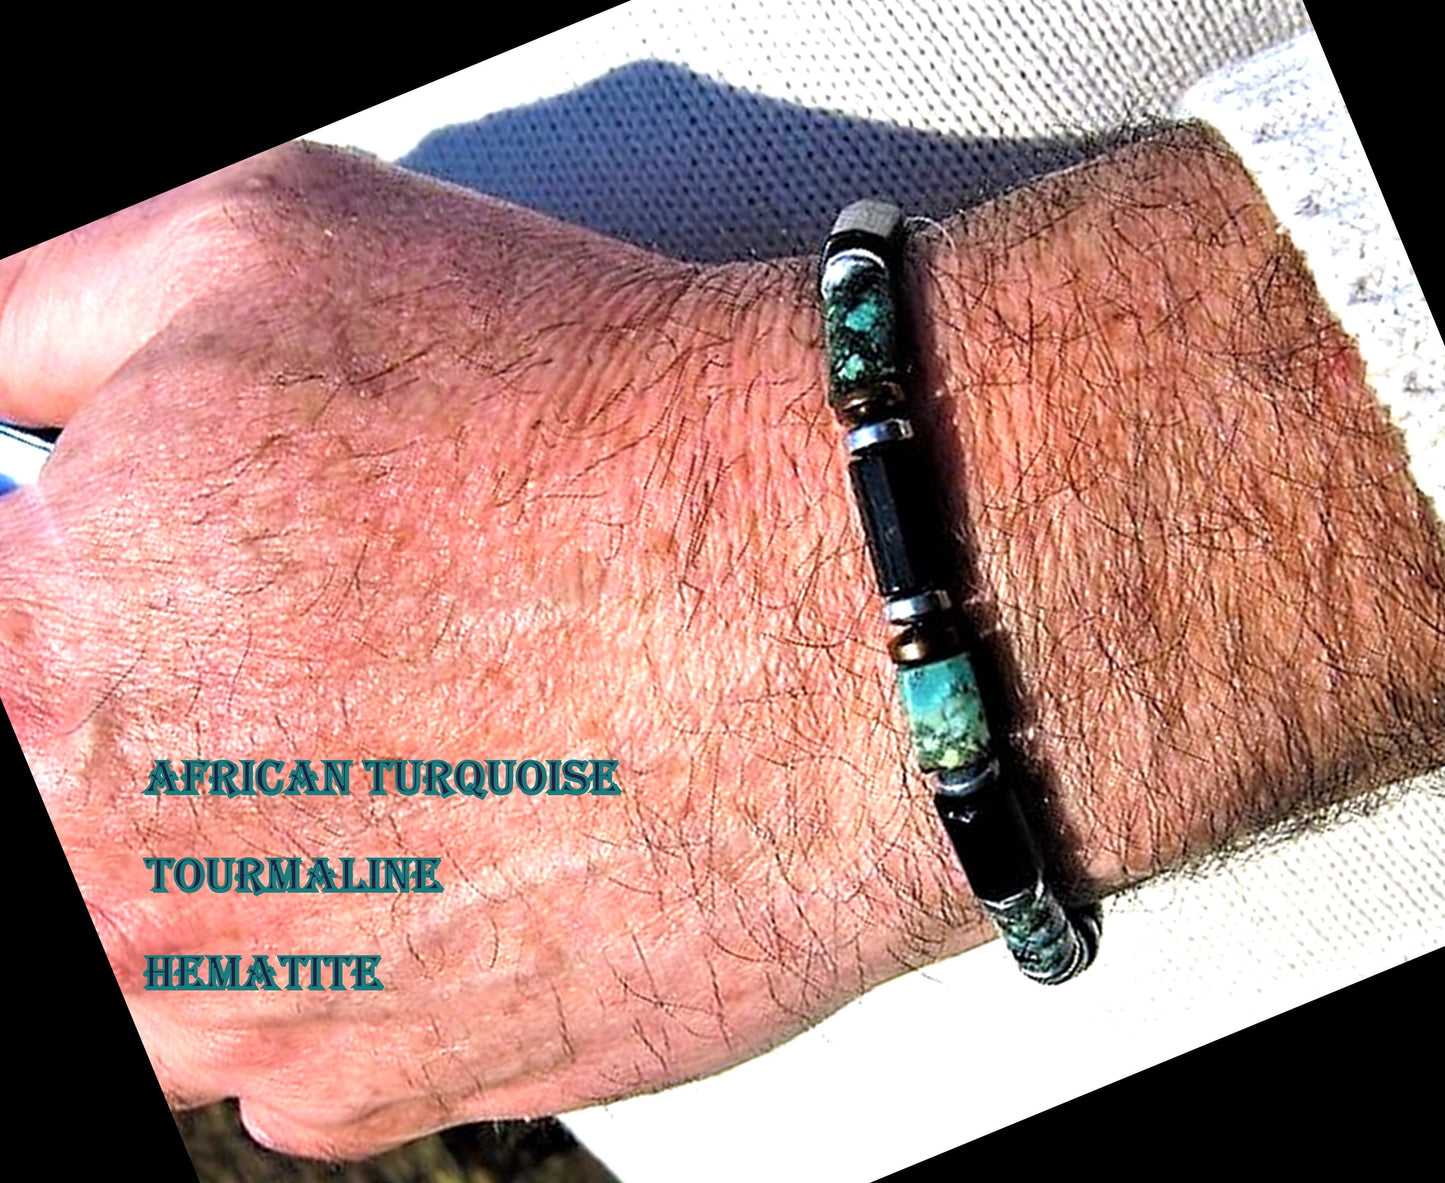 CAMELYS MAGIC 4 MEN - Bracelet african TURQUOISE Tourmaline Onyx Lava Coco wood heishi Hematite Healing stone, handmade bracelet men gift